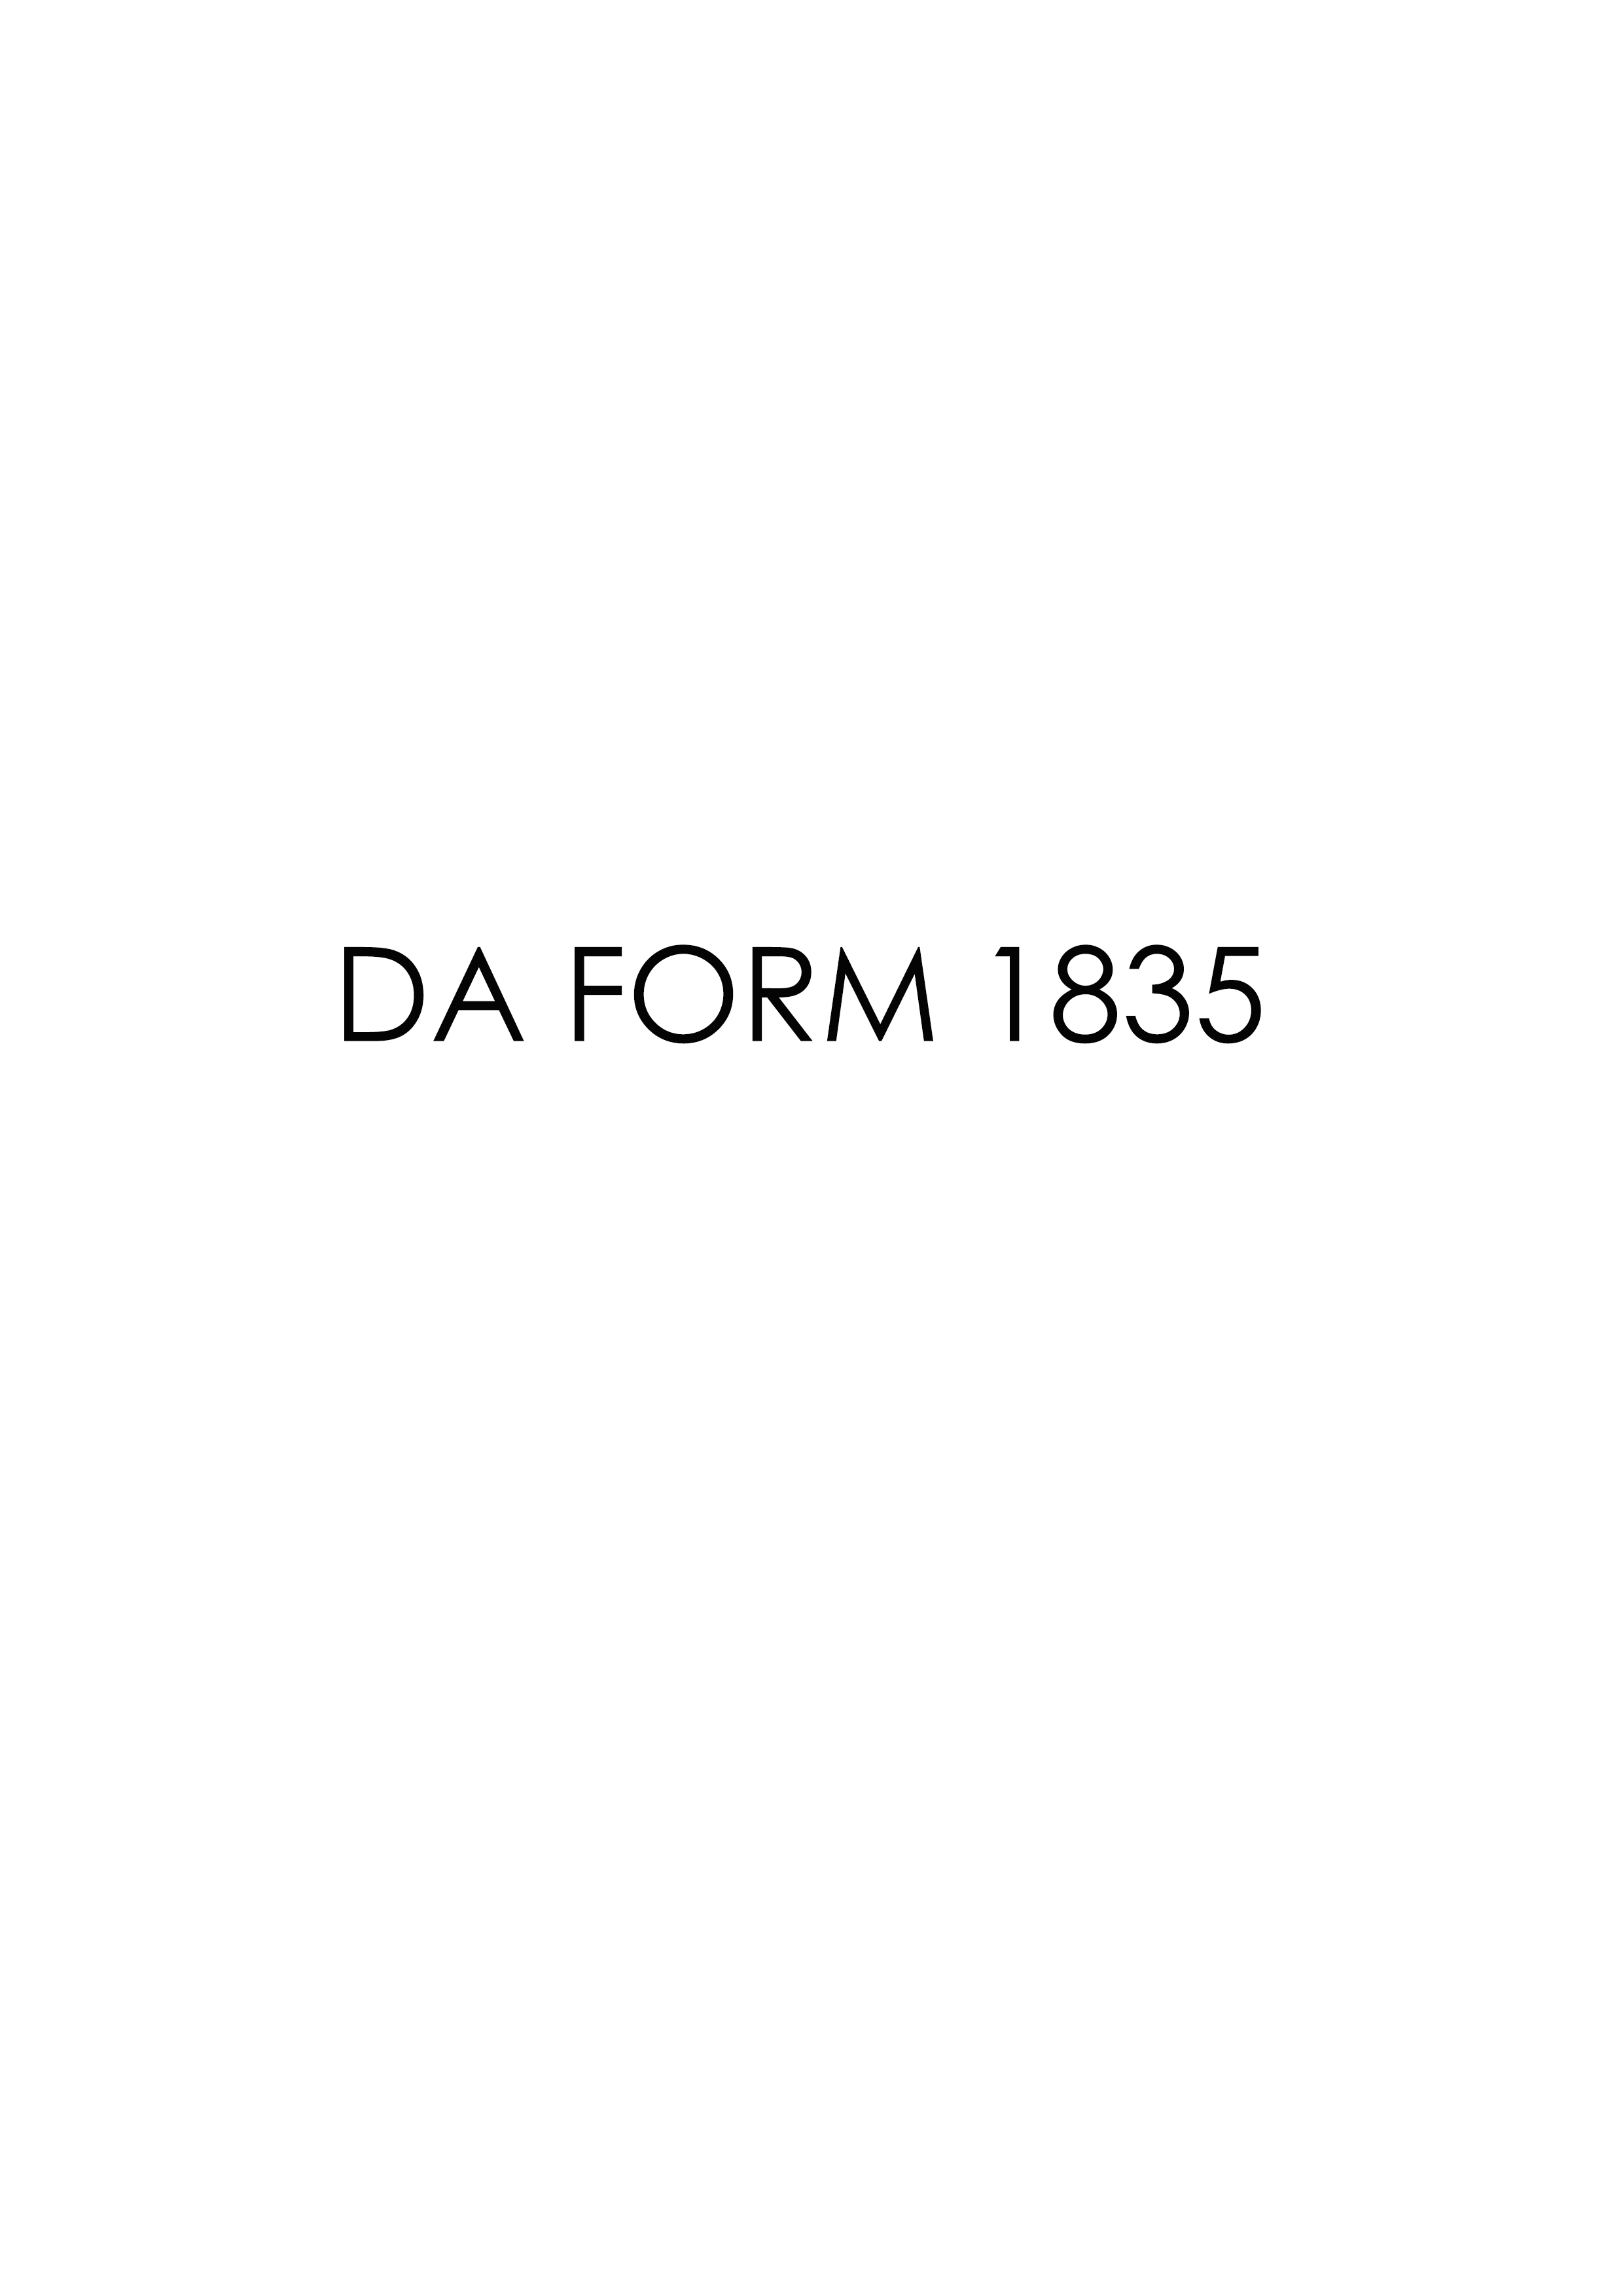 Download da 1835 Form